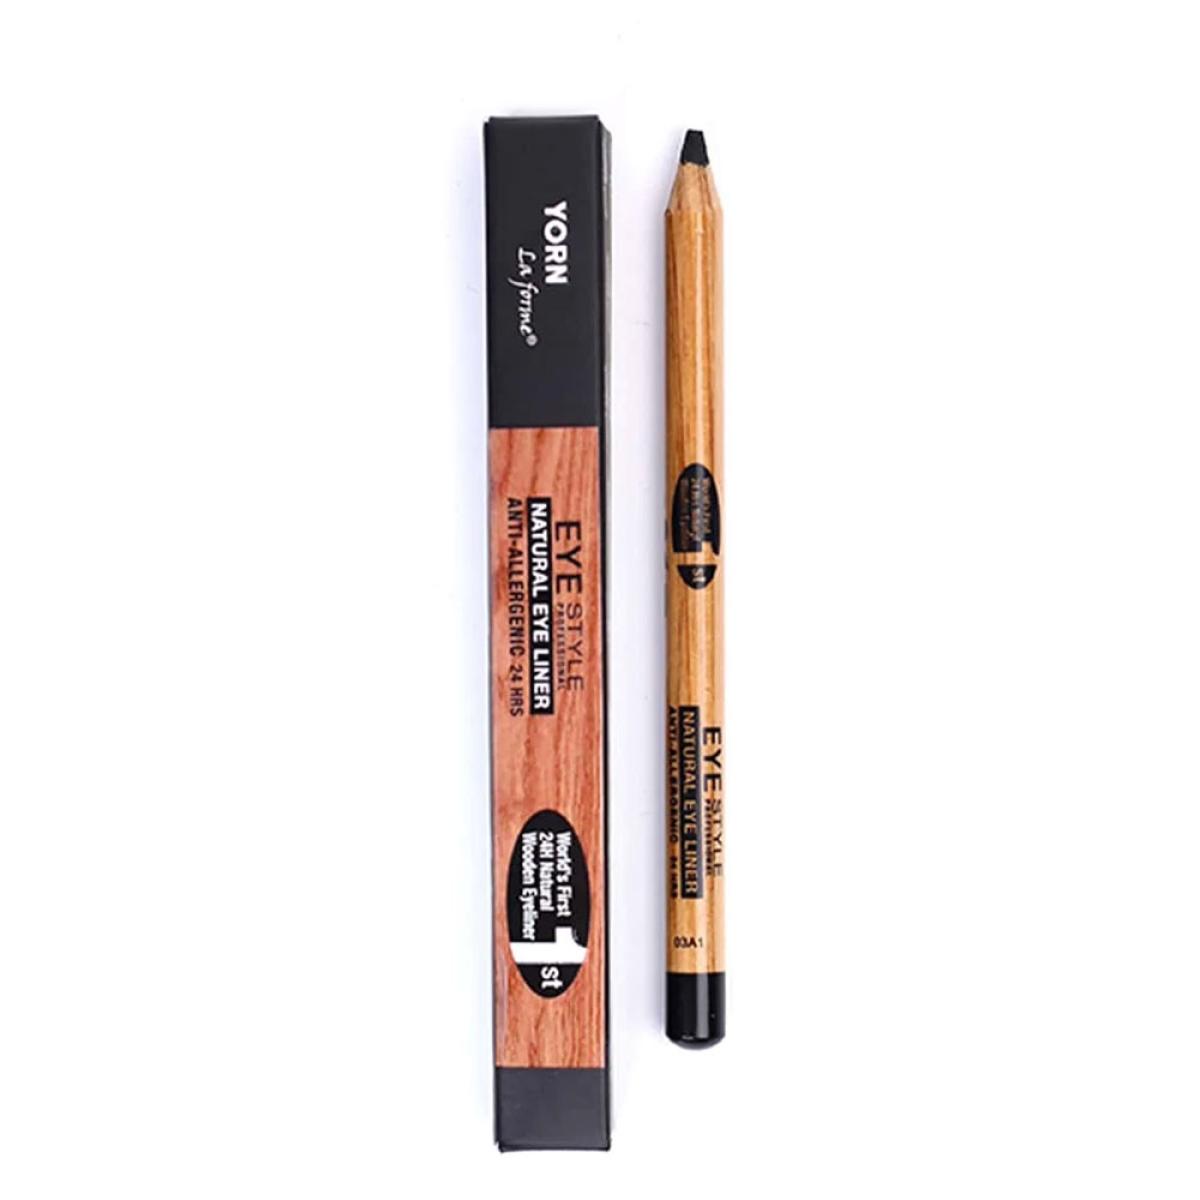  مداد چشم مدل Natural  - Yorn Natural Eyeliner Pencil